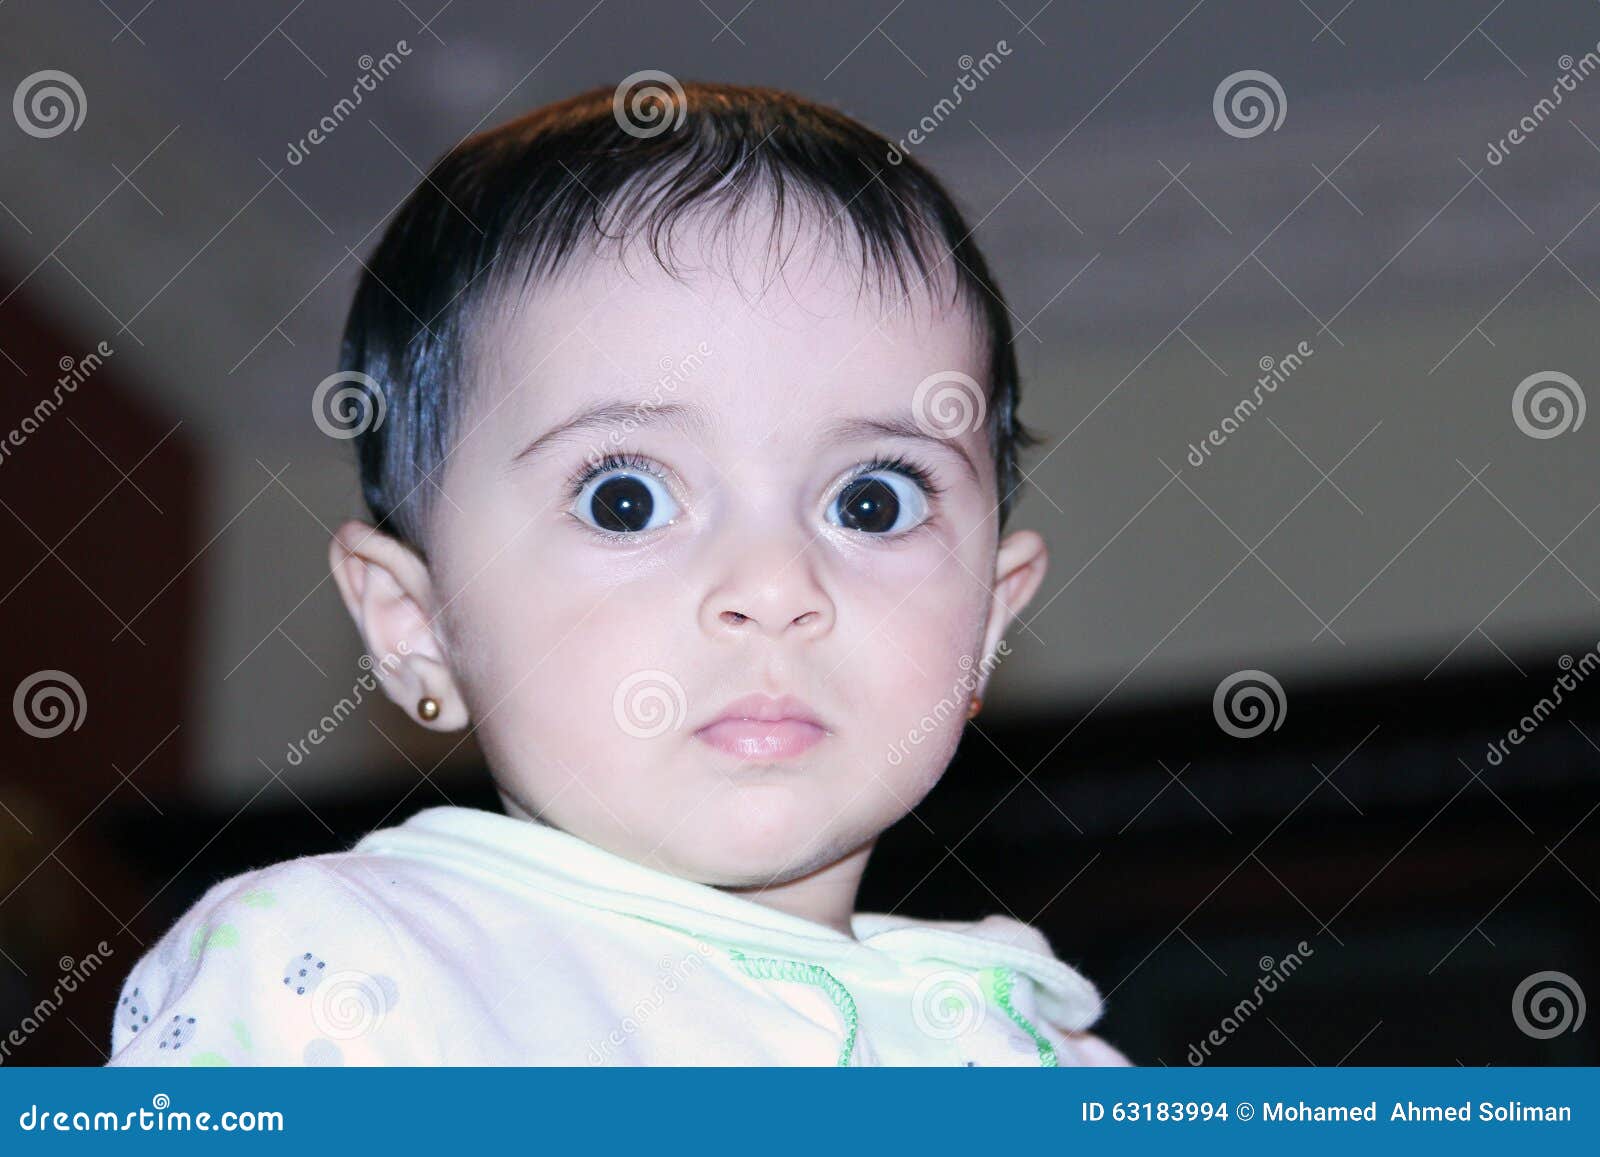 Arab baby girl staring stock photo. Image of baby, looking - 63183994